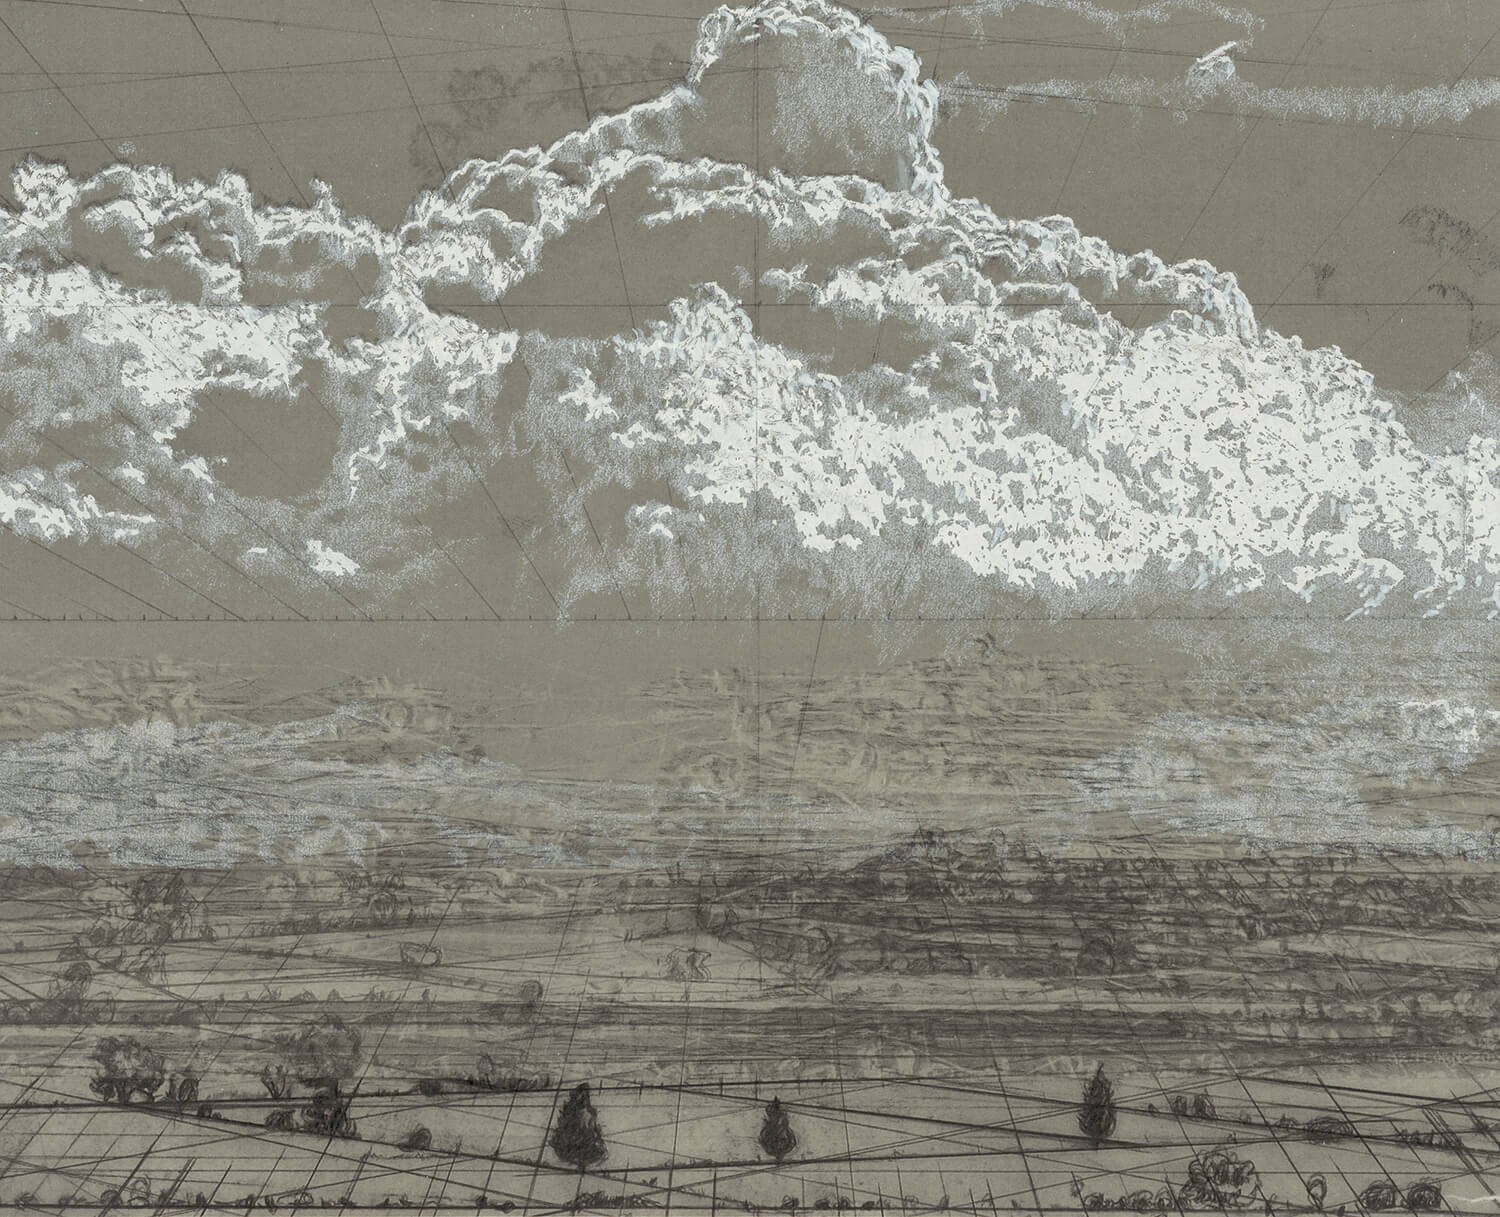 Heike Negenborn, Weiße Wolke Nr. 11, 2021, Chine Collé auf Büttenpapier, gerahmt, Unikatsgrafik, 50 x 60 cm